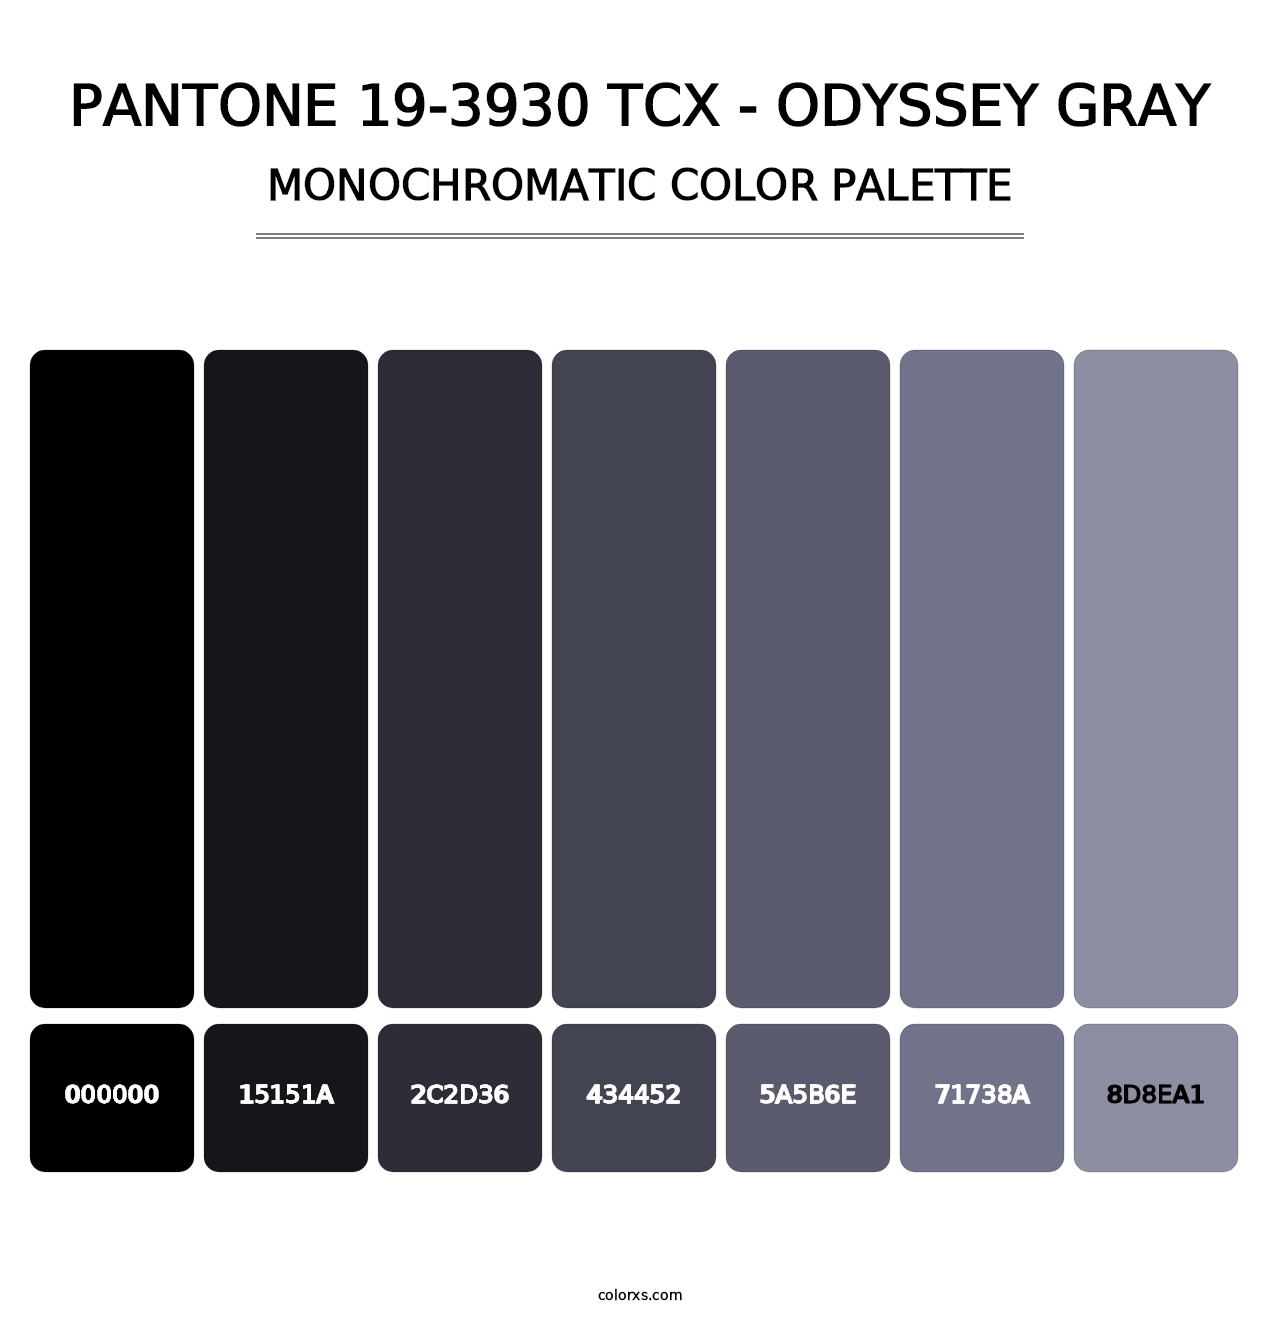 PANTONE 19-3930 TCX - Odyssey Gray - Monochromatic Color Palette